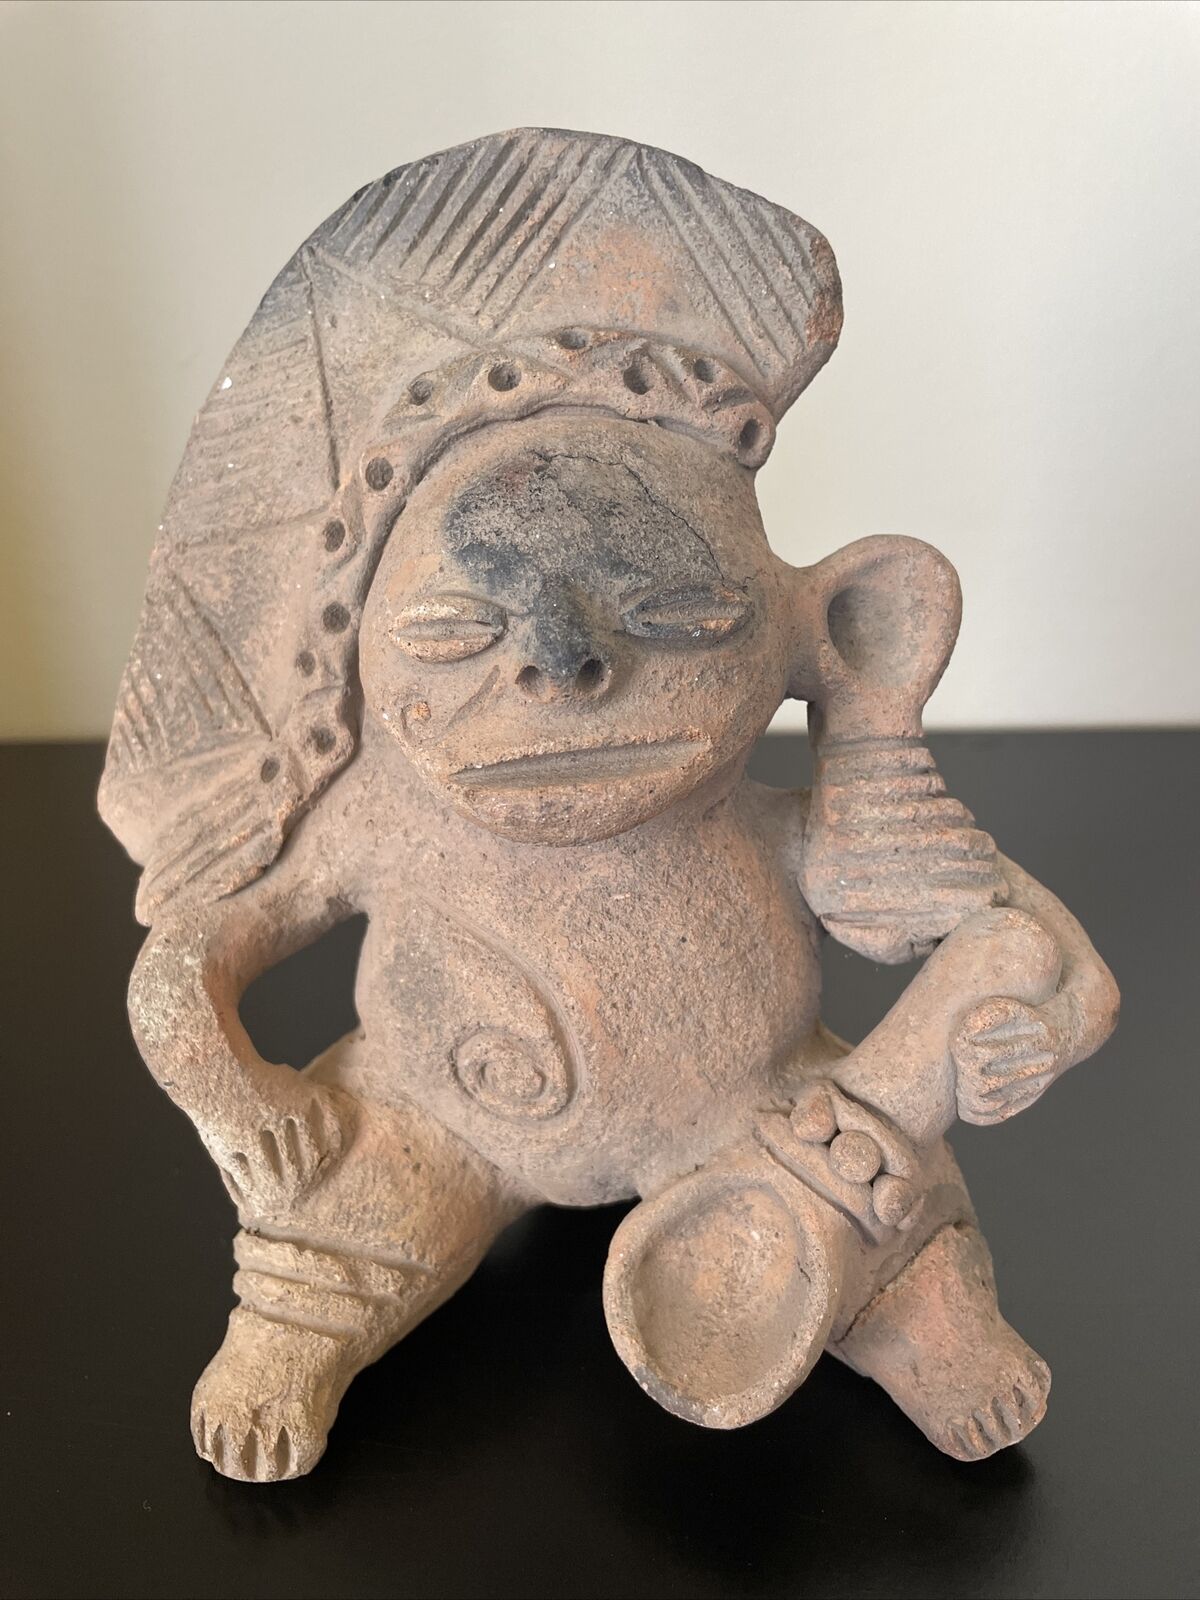 Outstanding Pre-Columbian(?) Mayan Terracotta Figure  - C.600 - 1100AD